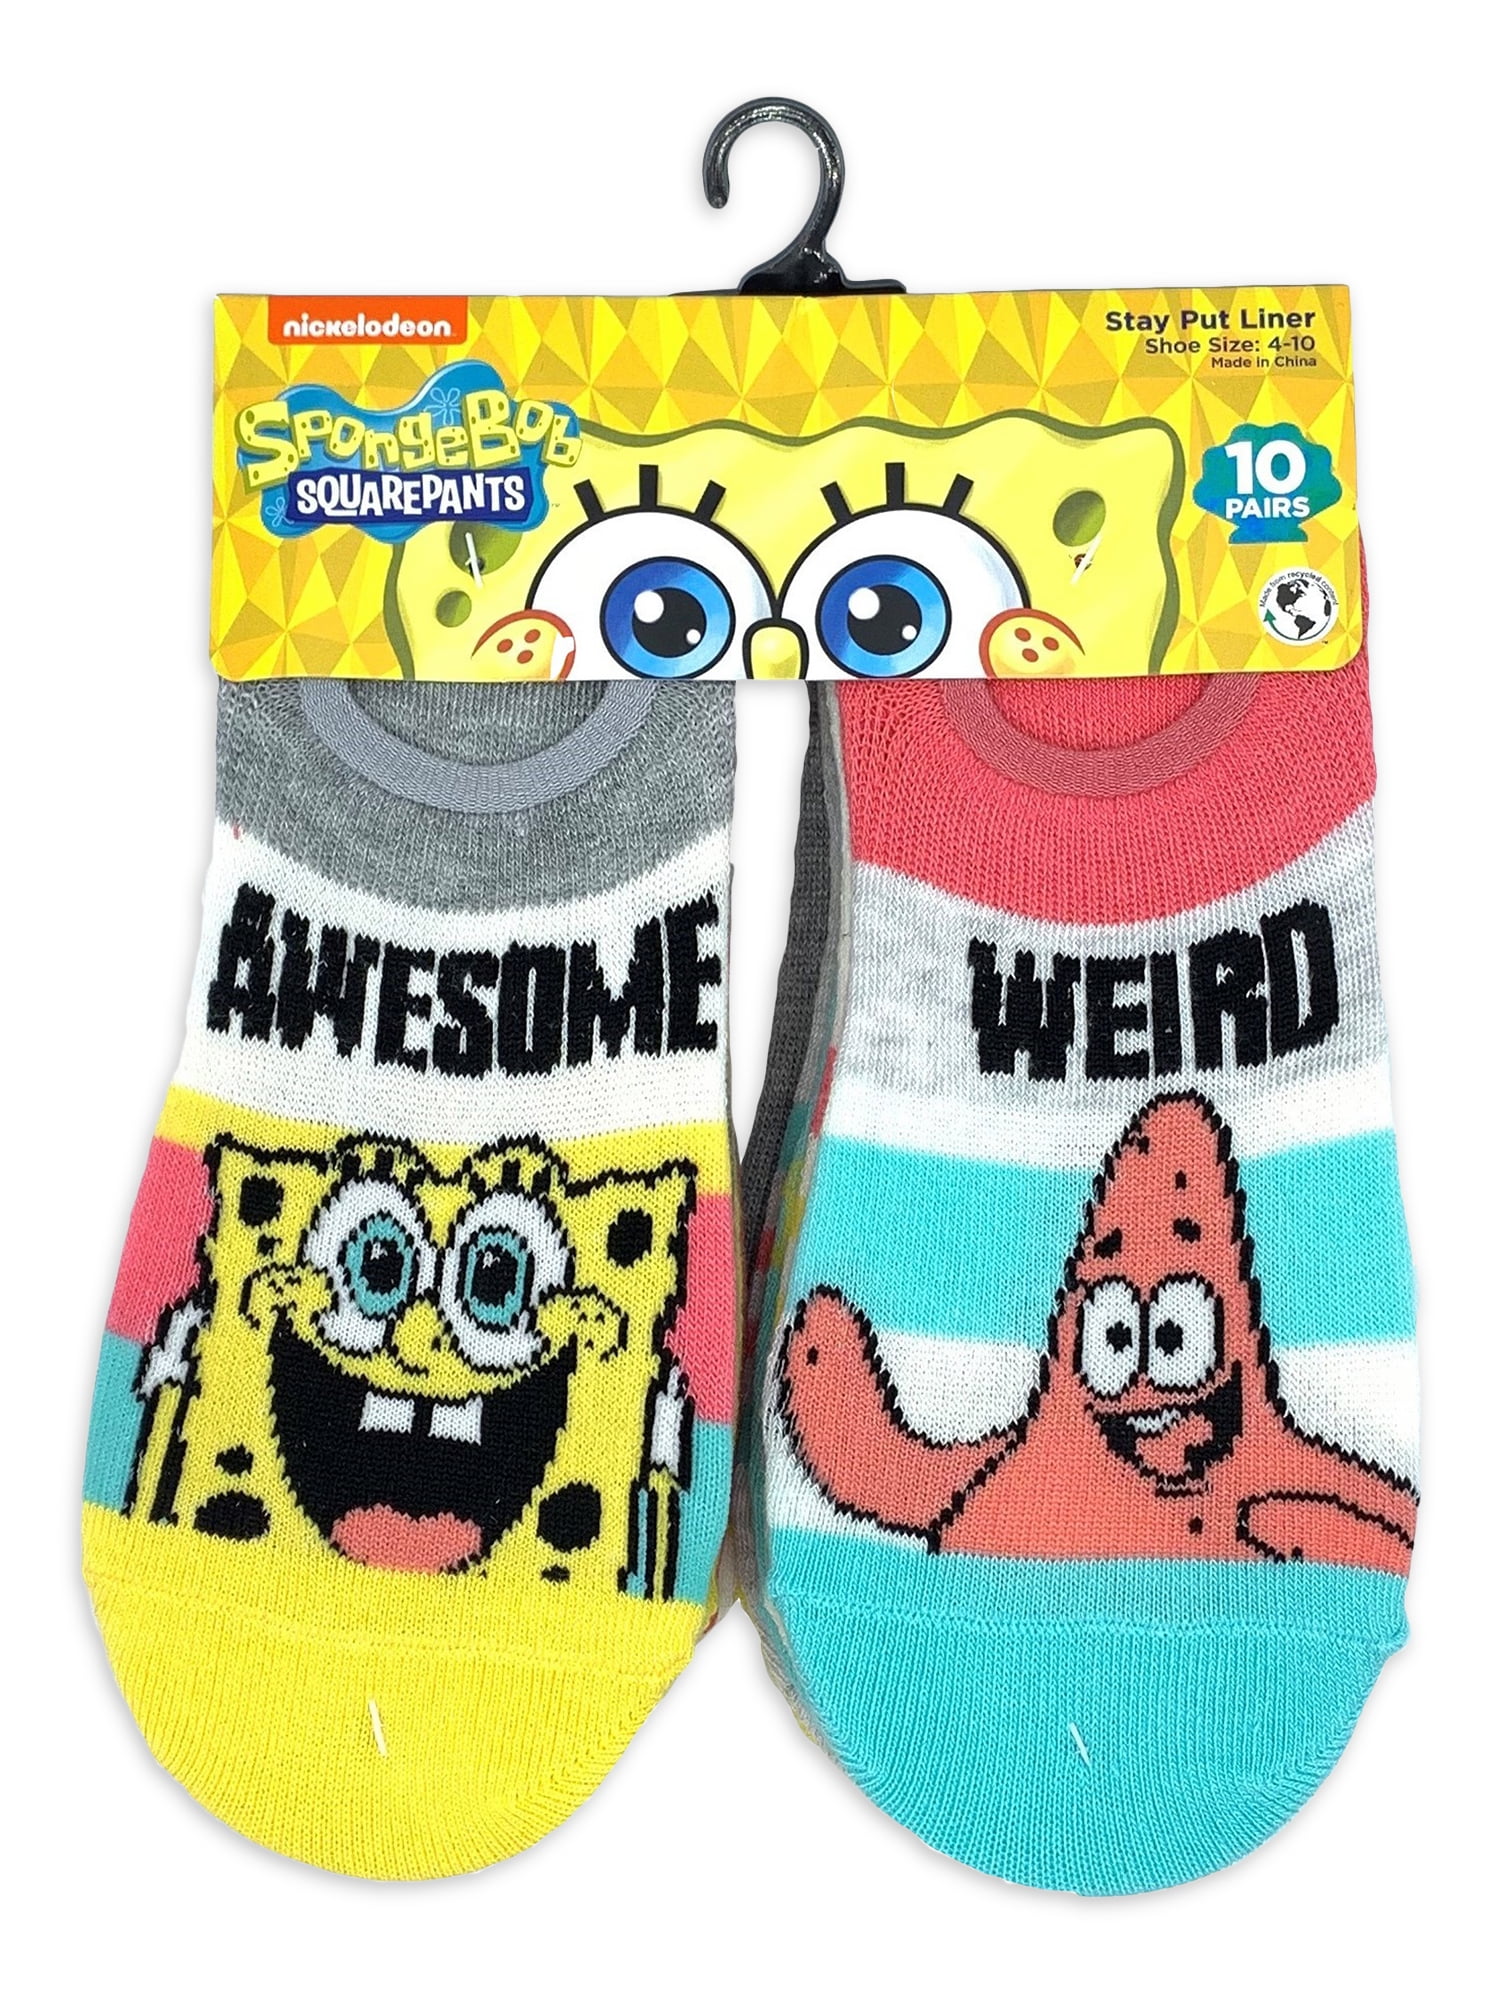 SpongeBob SquarePants Women's Stay-Put Liner Socks, 10-Pack, Size 4-10 